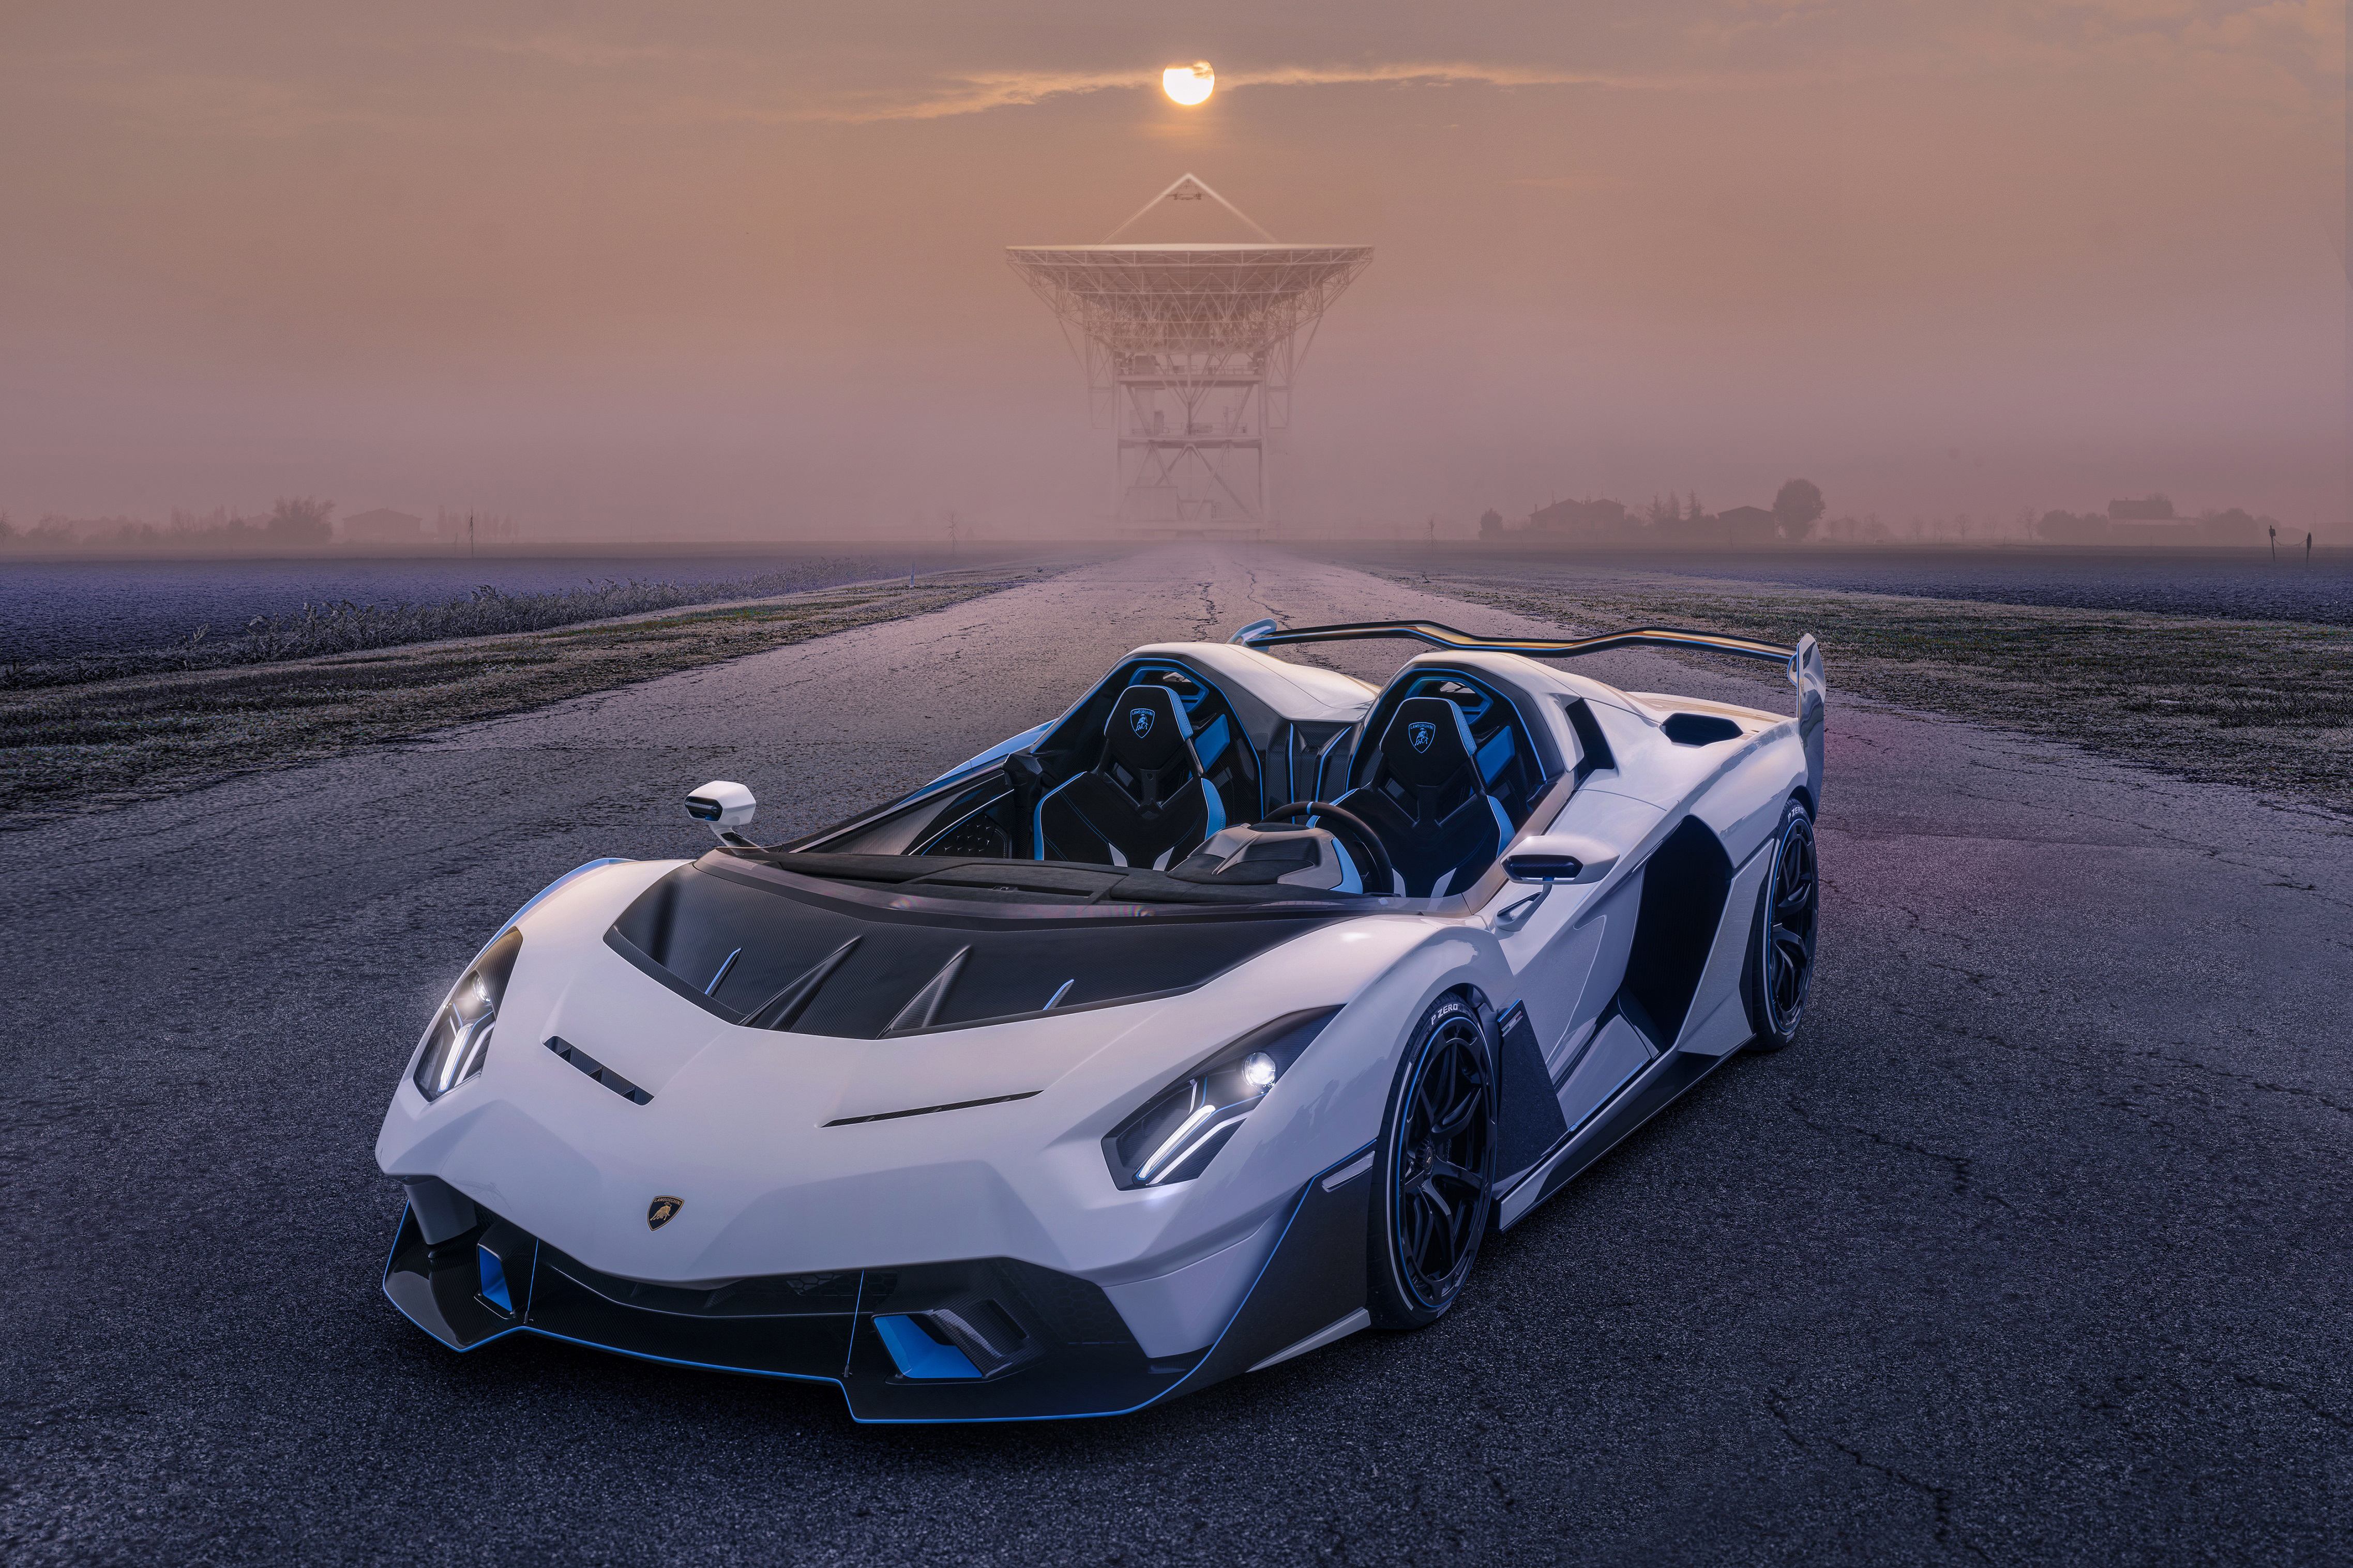 Фото авто Lamborghini родстер - бесплатные картинки на Fonwall